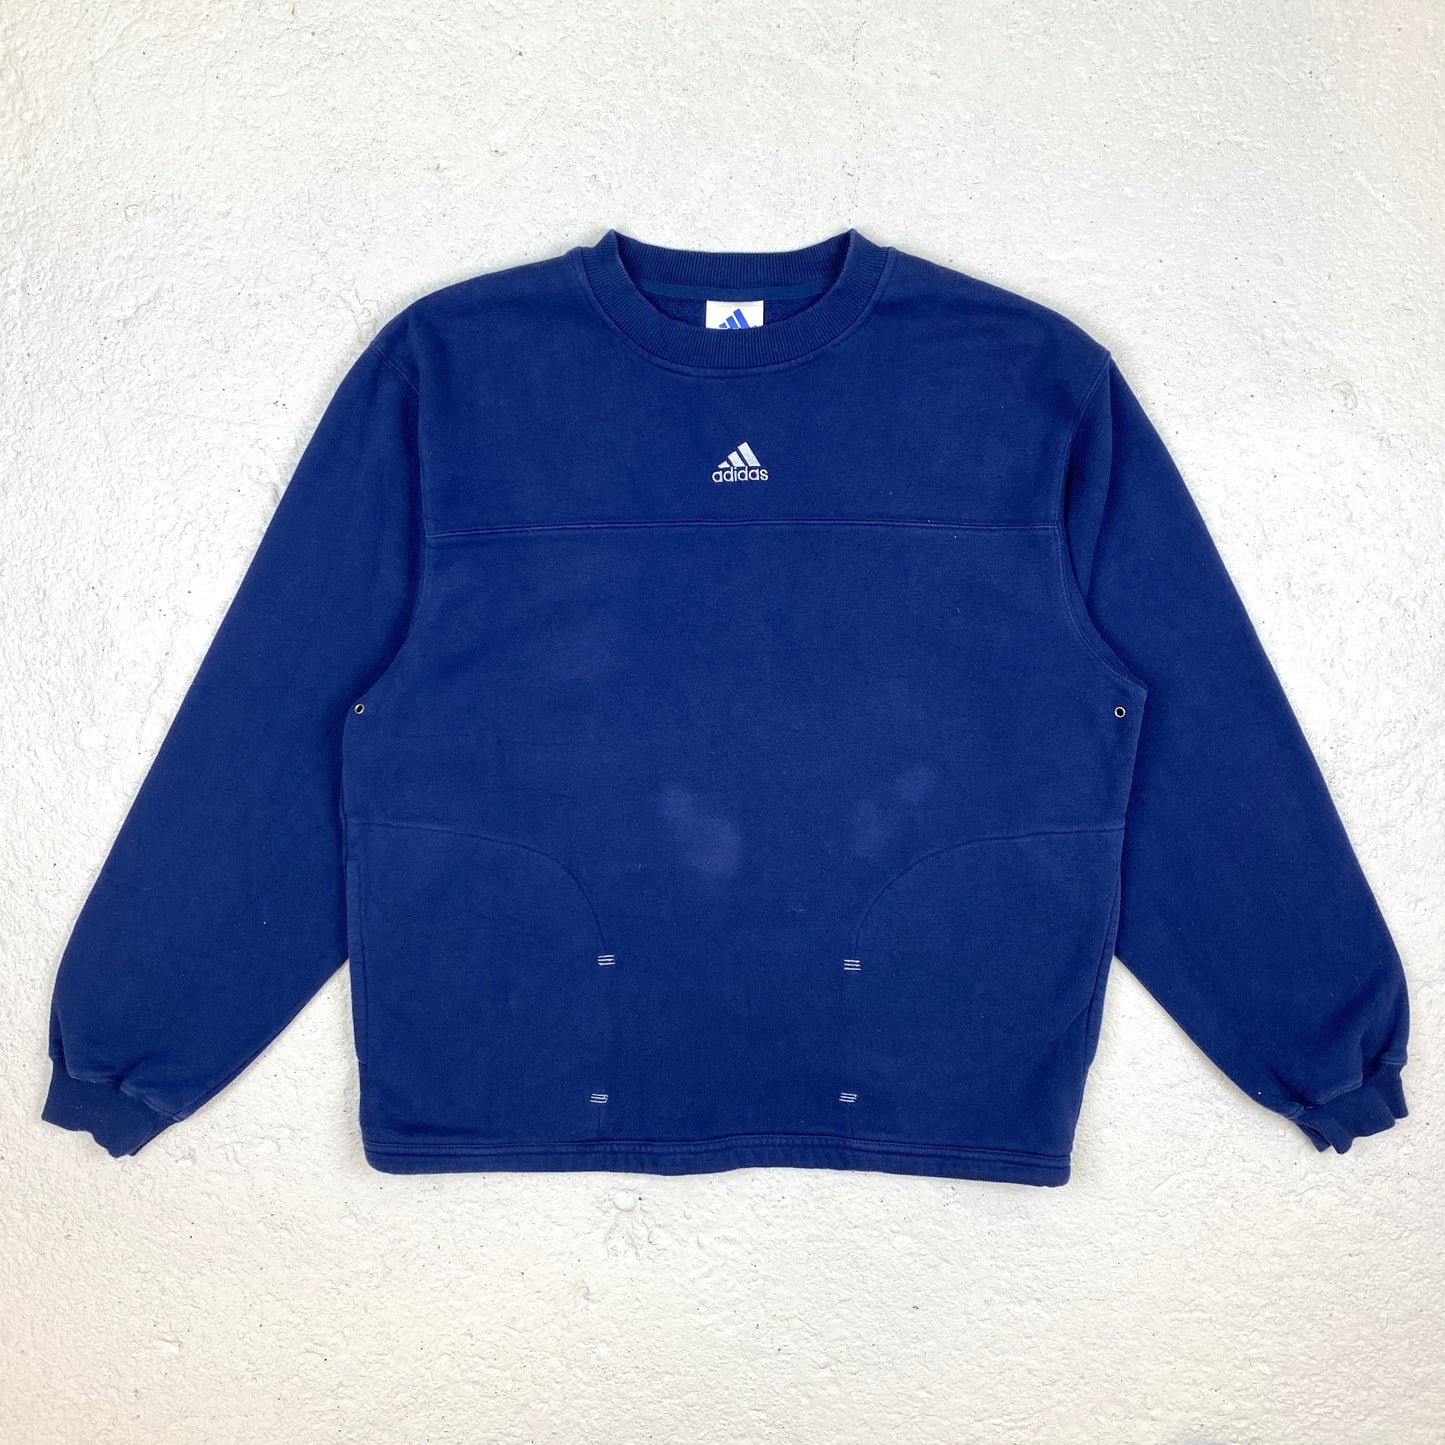 Adidas heavyweight embroidered center logo sweater (M-L)